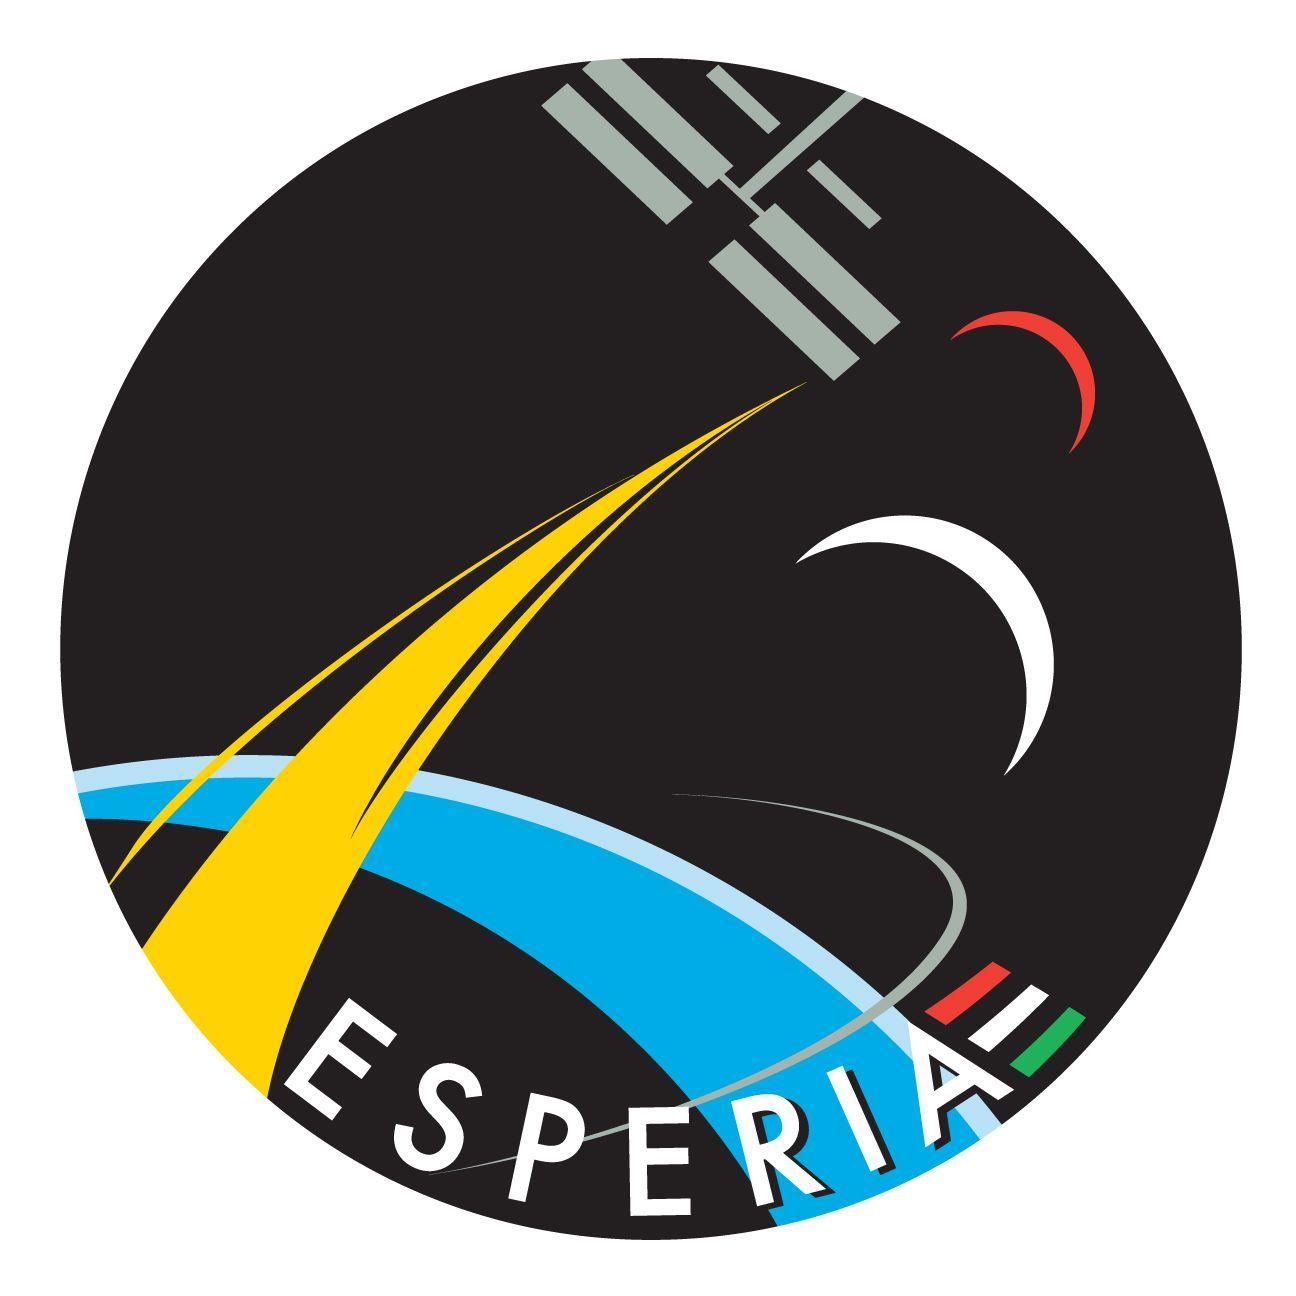 Space Mission Logo - Why Esperia? / Esperia / Human Spaceflight / Our Activities / ESA